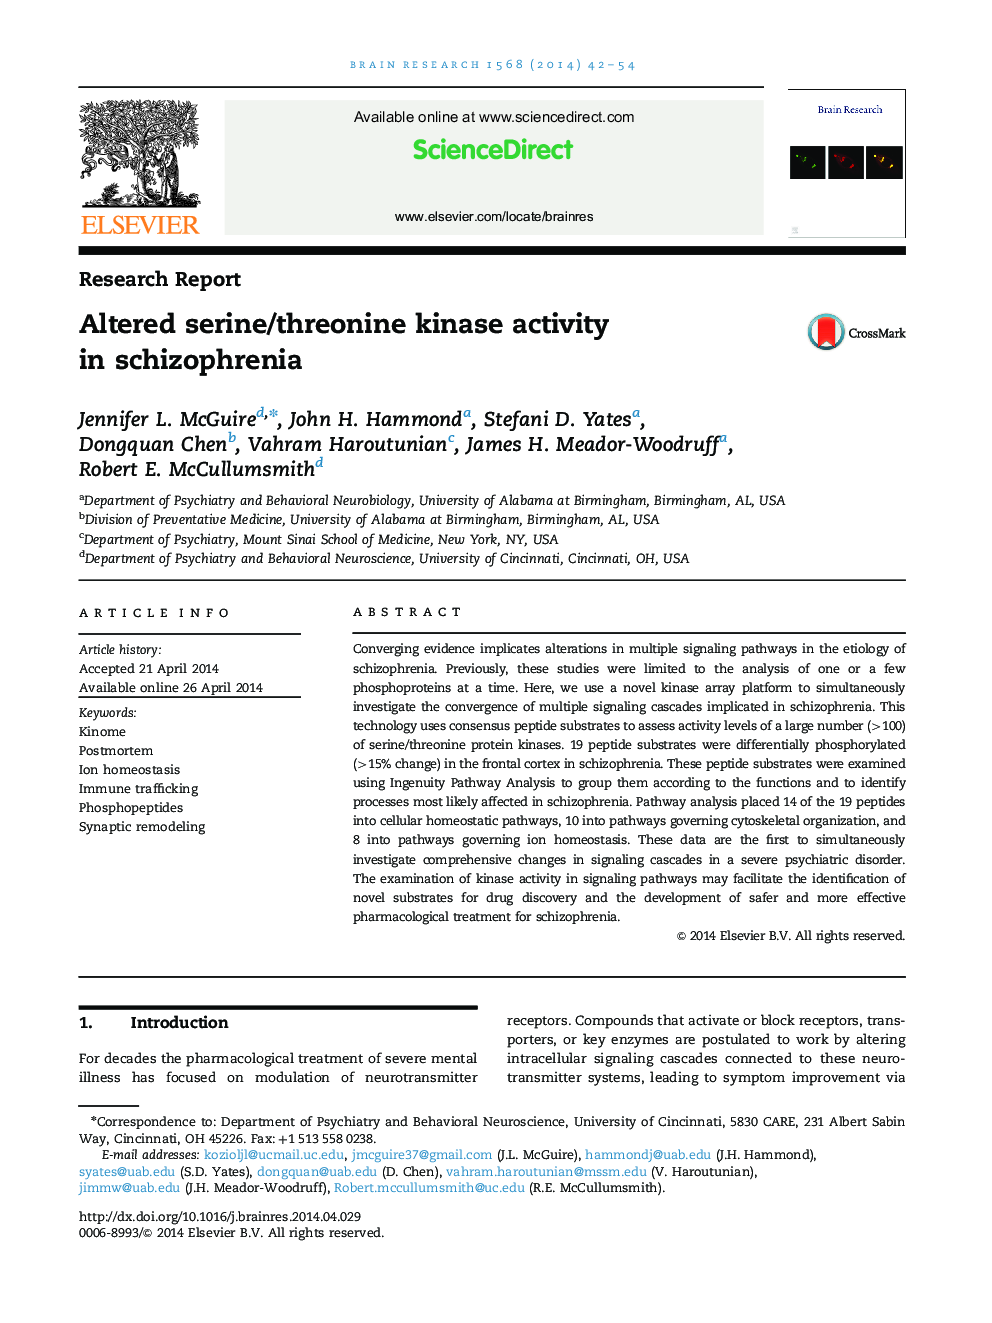 Research ReportAltered serine/threonine kinase activity in schizophrenia